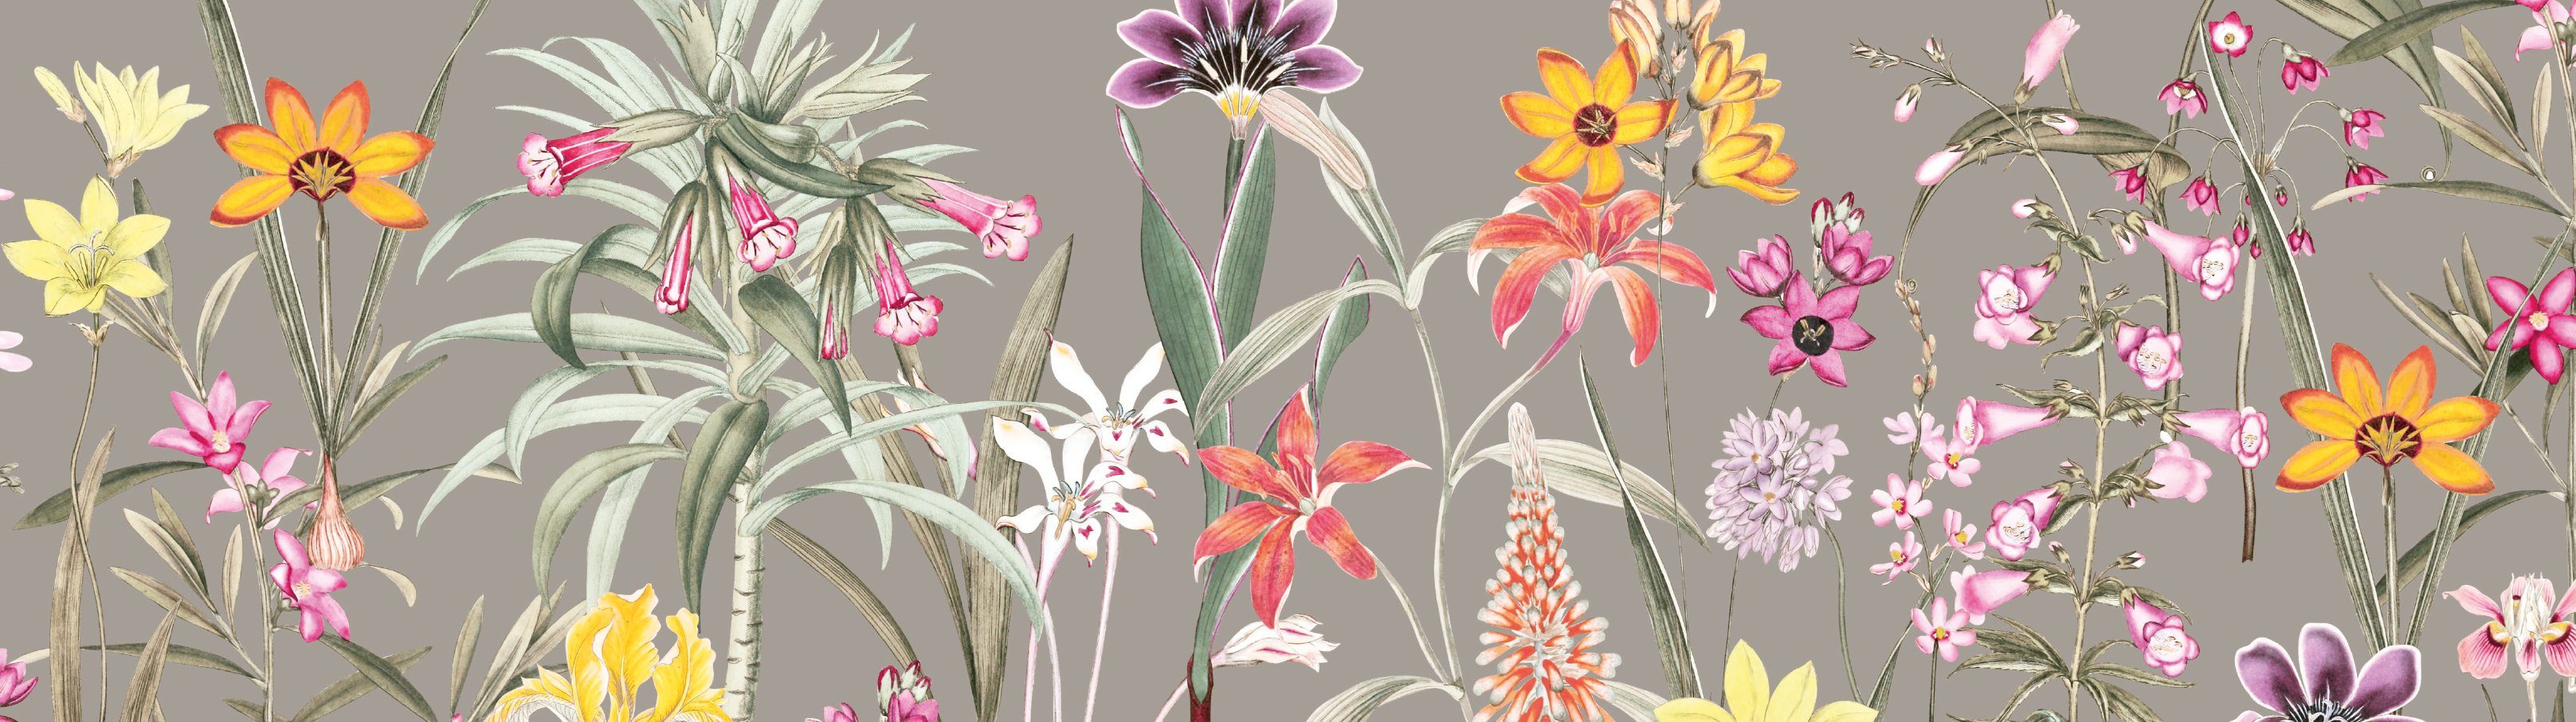 anna Botanical mehrfarbig/taupe wand - selbstklebend, - Garden selbstklebend Bordüre / floral, Blumen